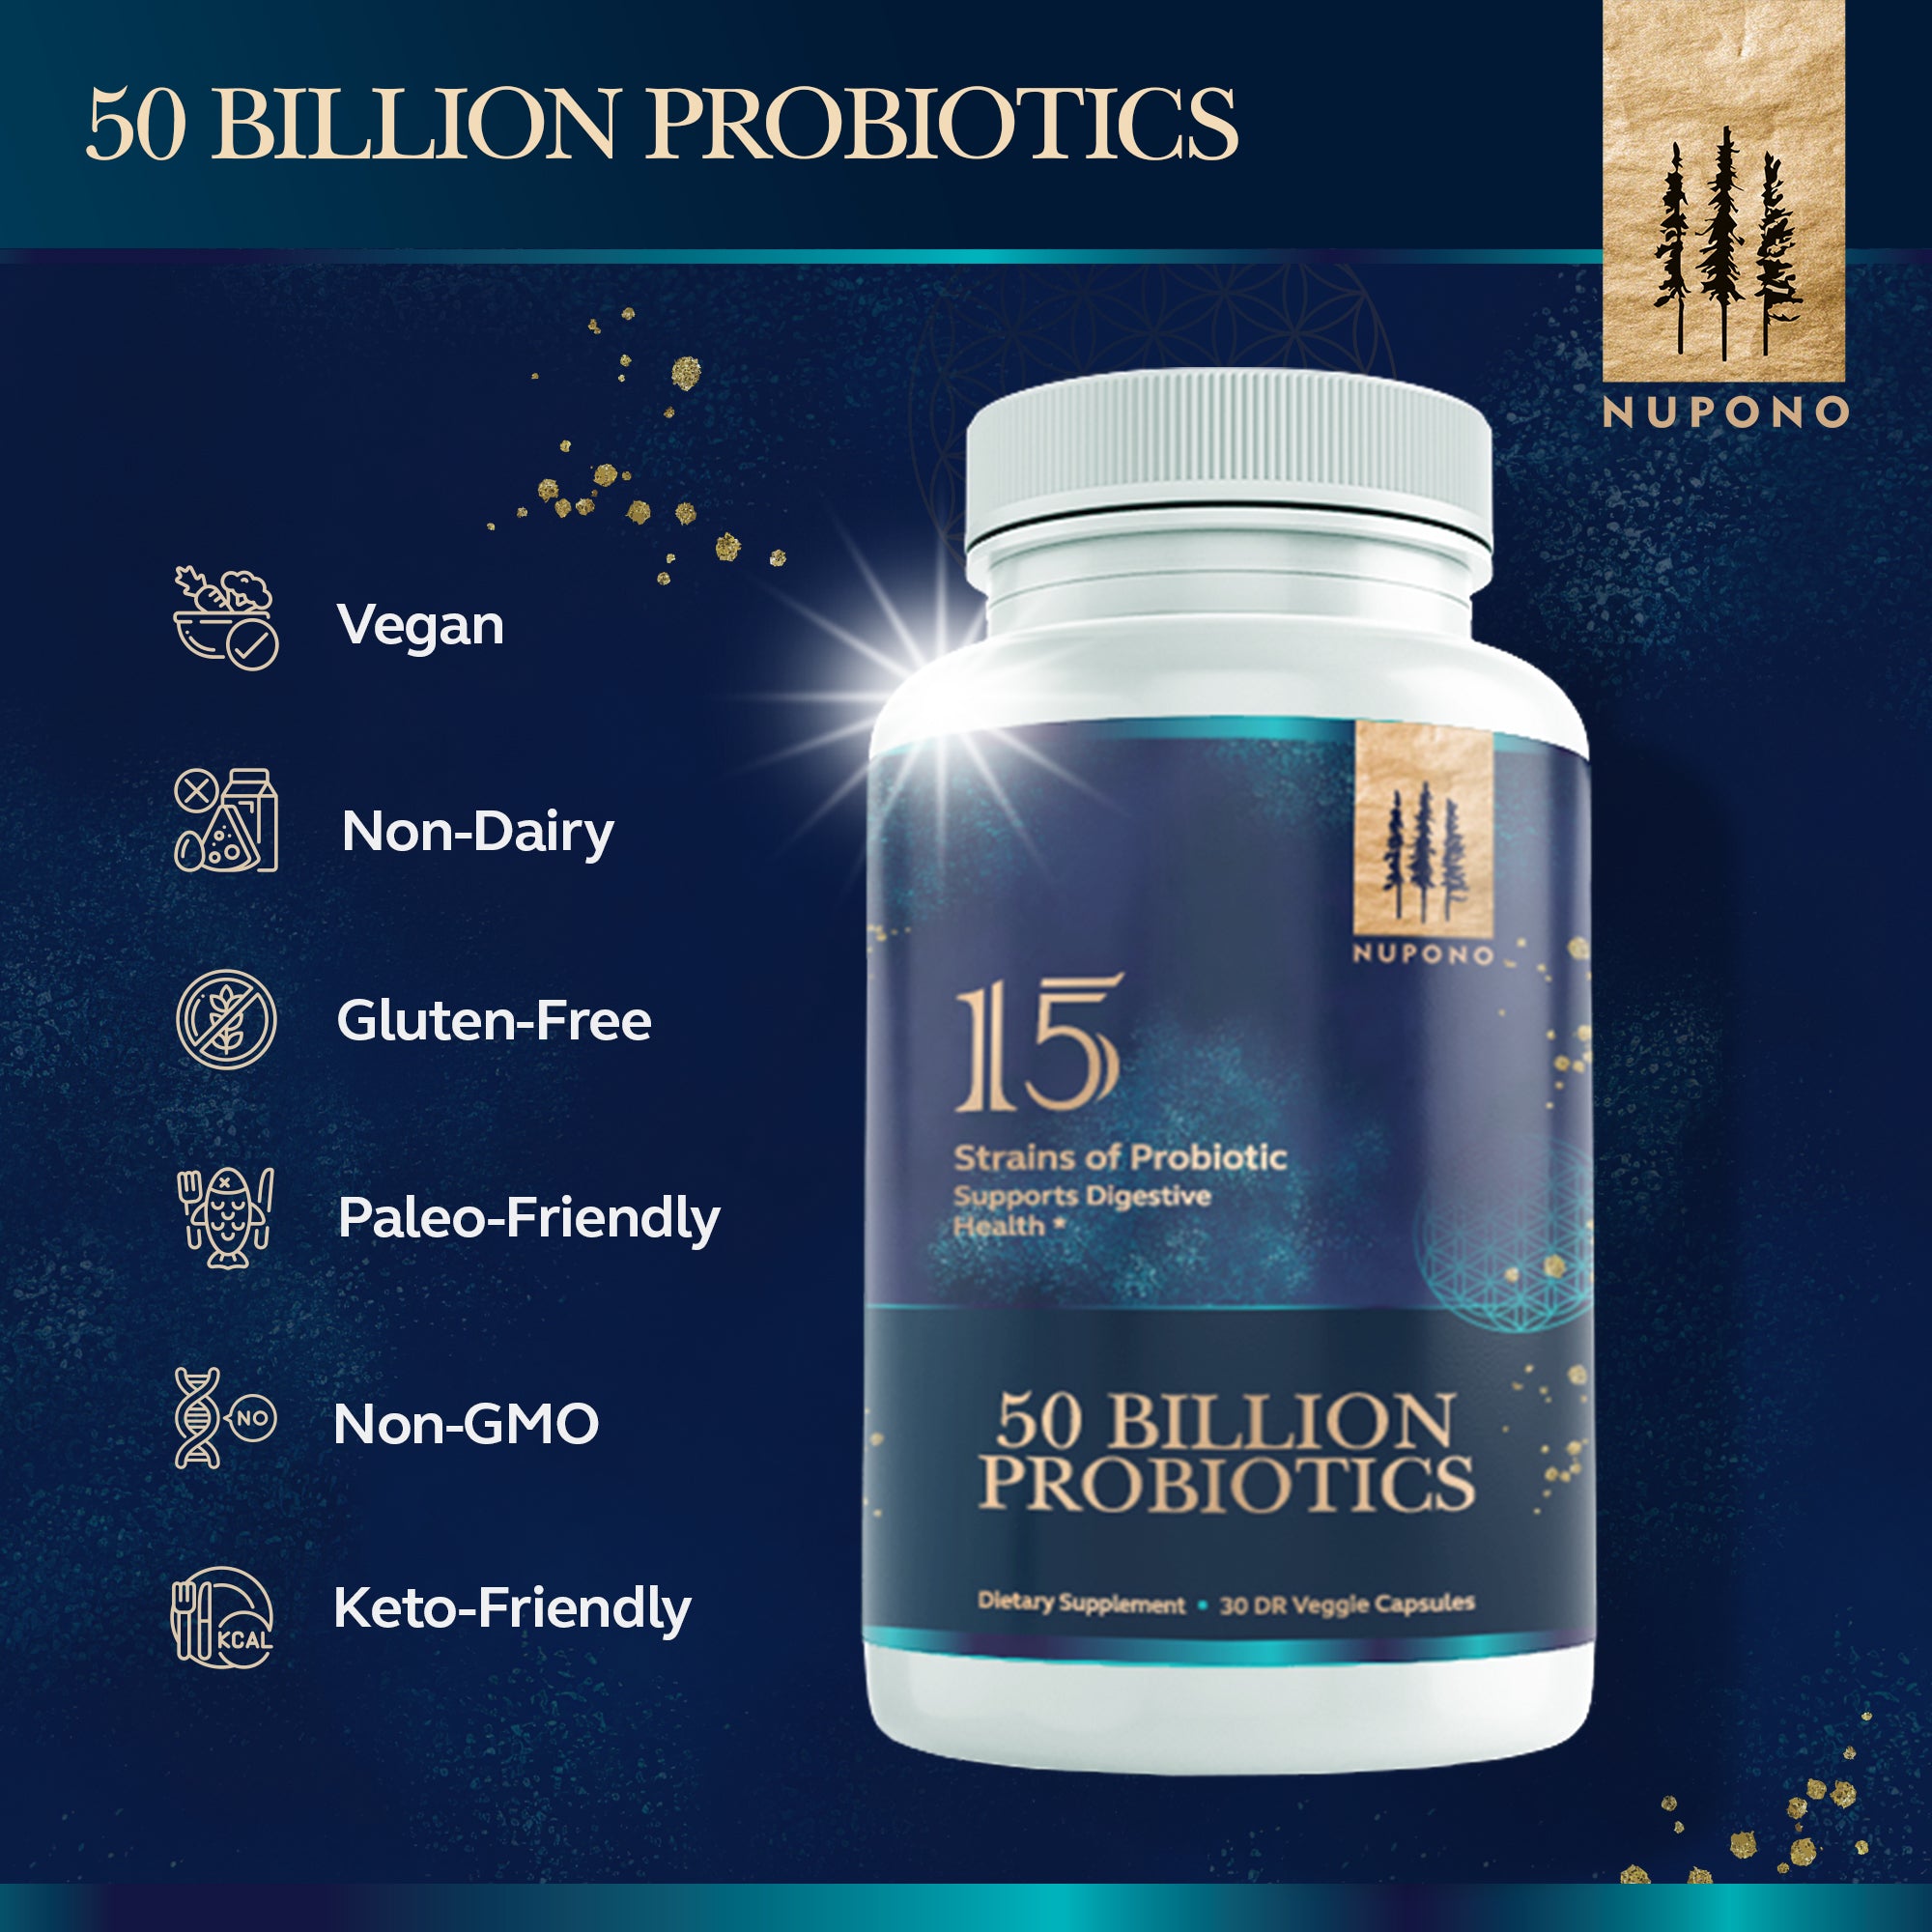 15 Strains 50 billion CFU Probiotic- Healthy Microbiome & Natural Digestive Function